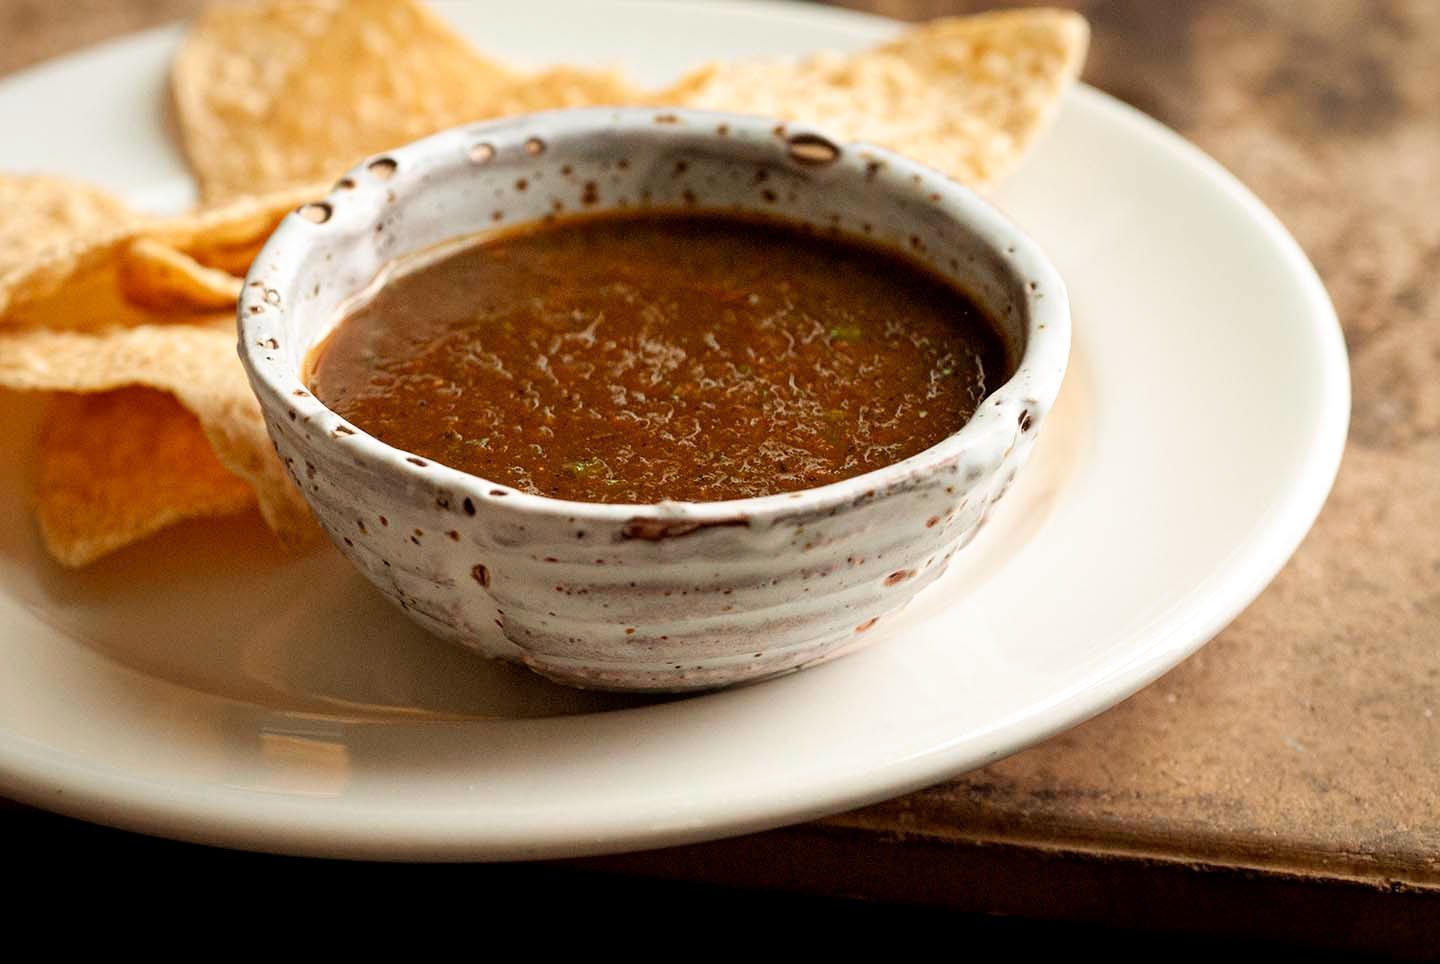 Salsa tatemada, South Texas roasted red salsa | Homesick Texan